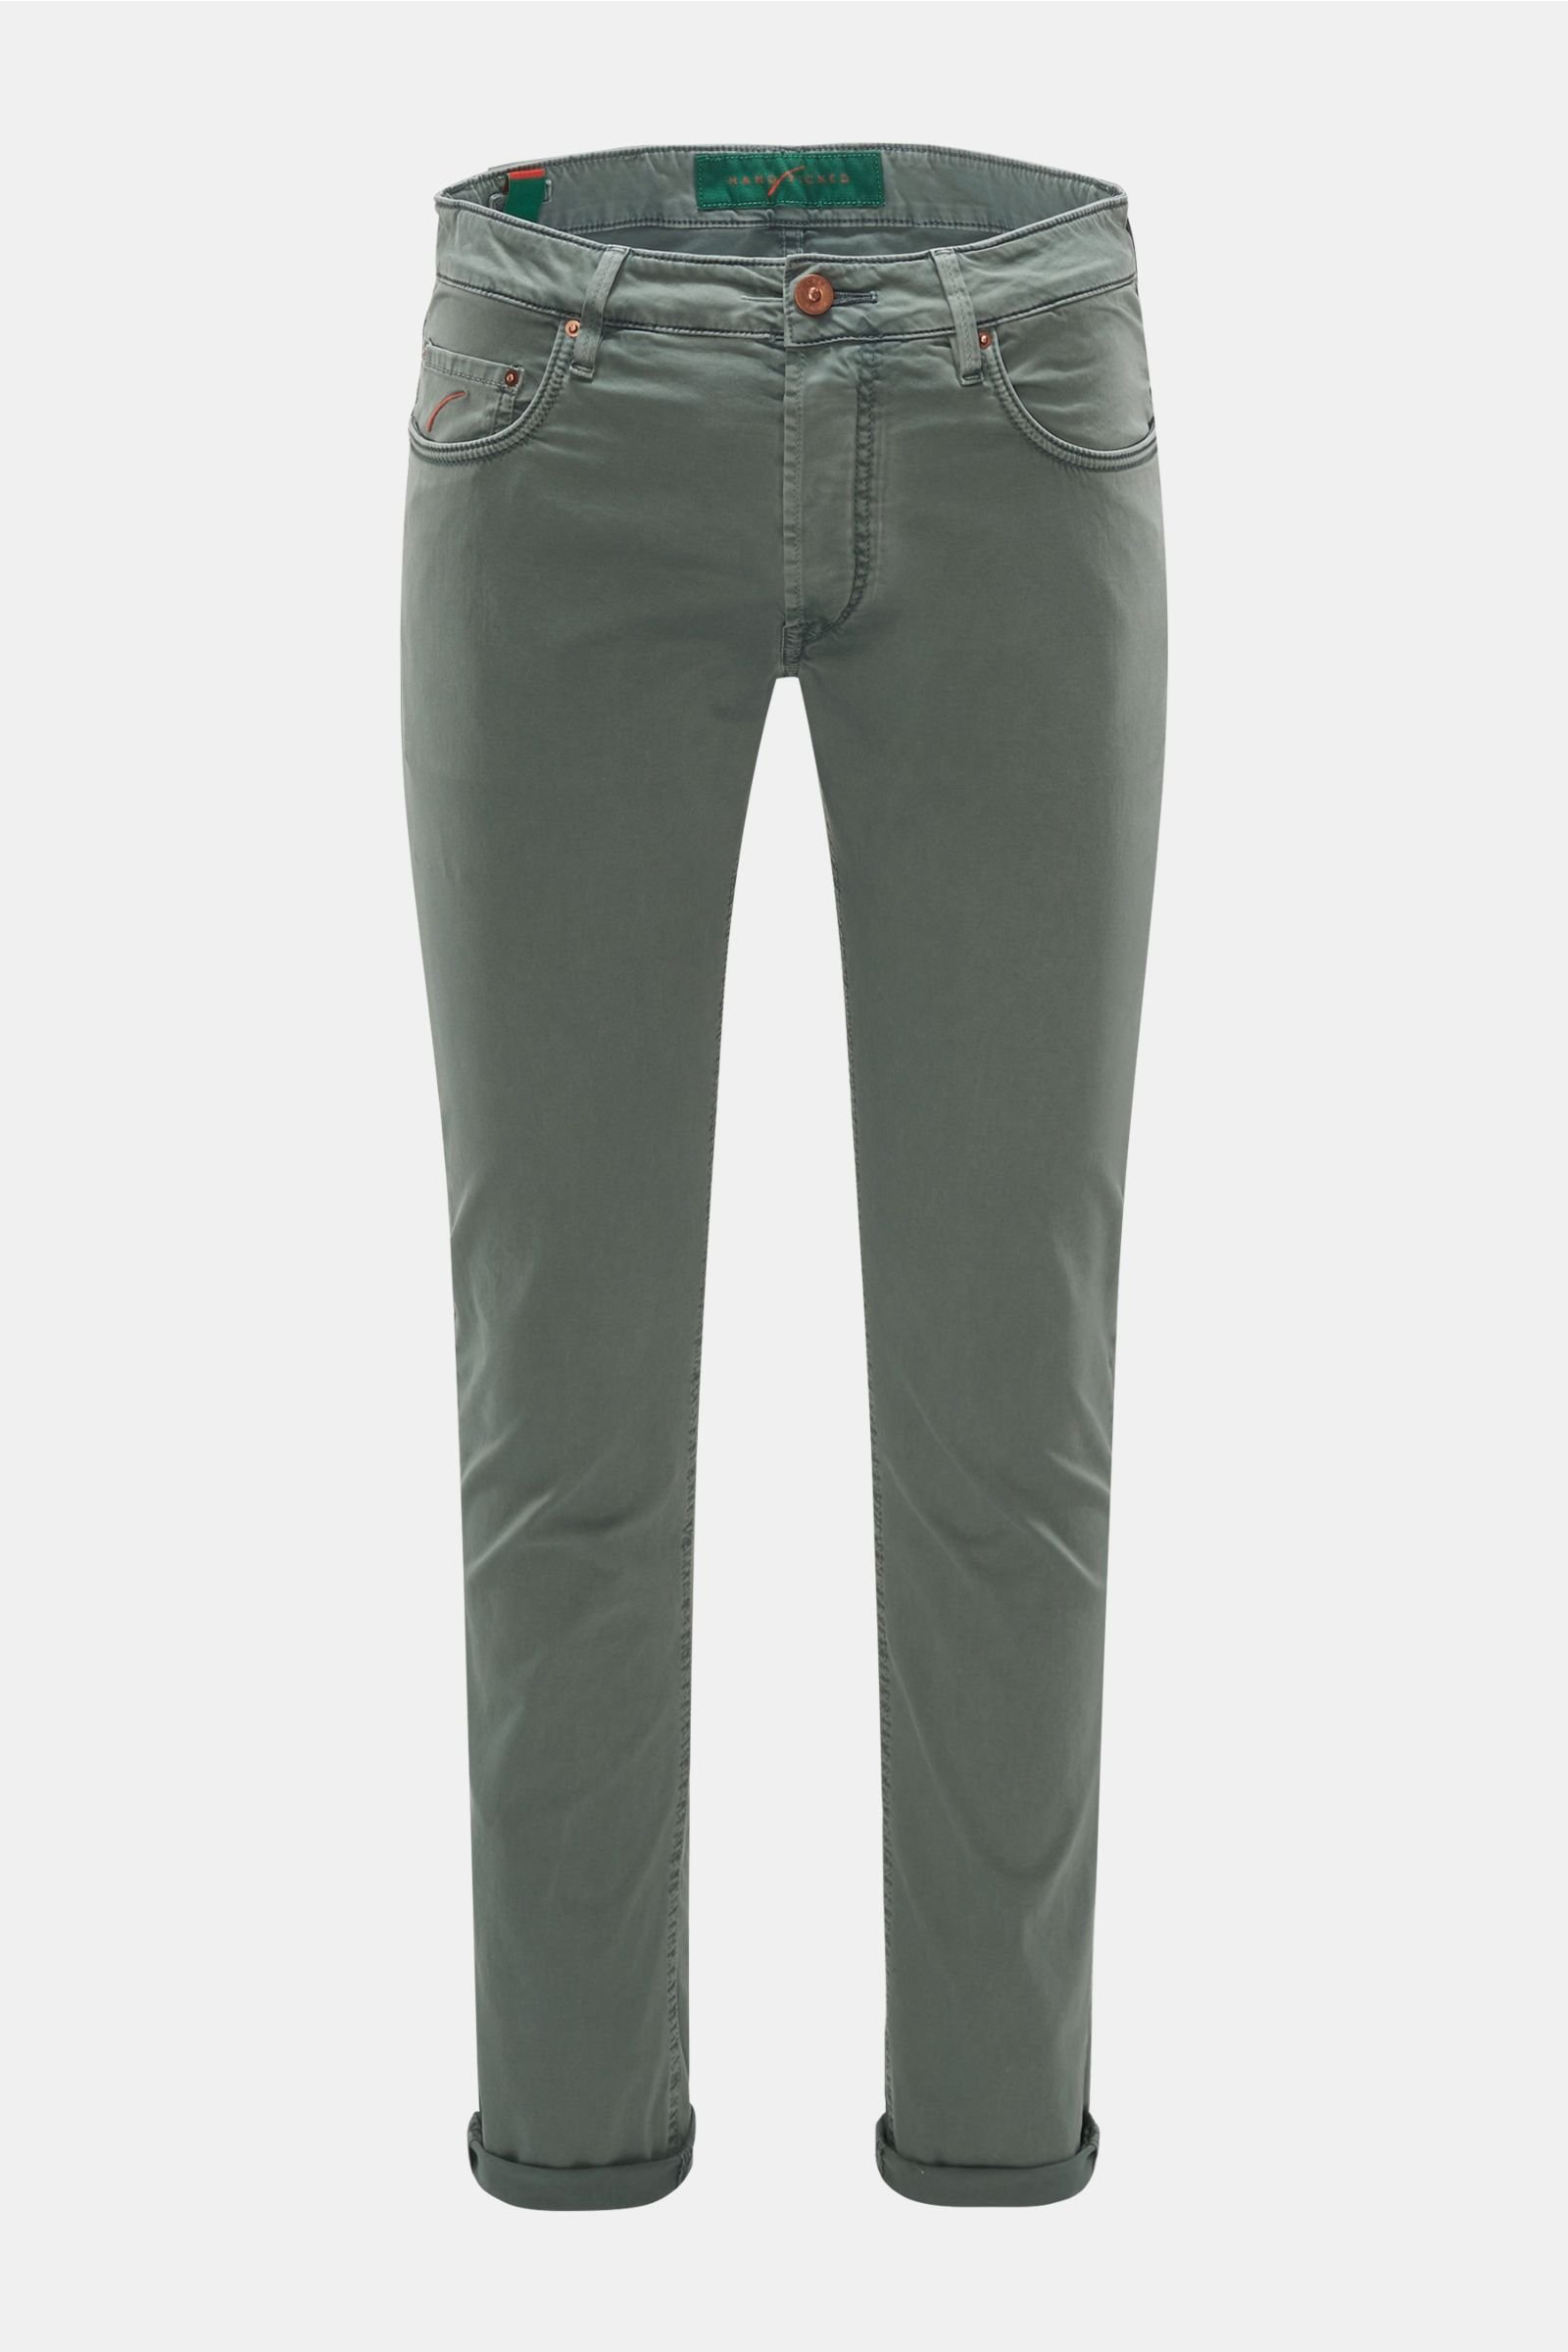 Cotton trousers 'Ravello' grey-green